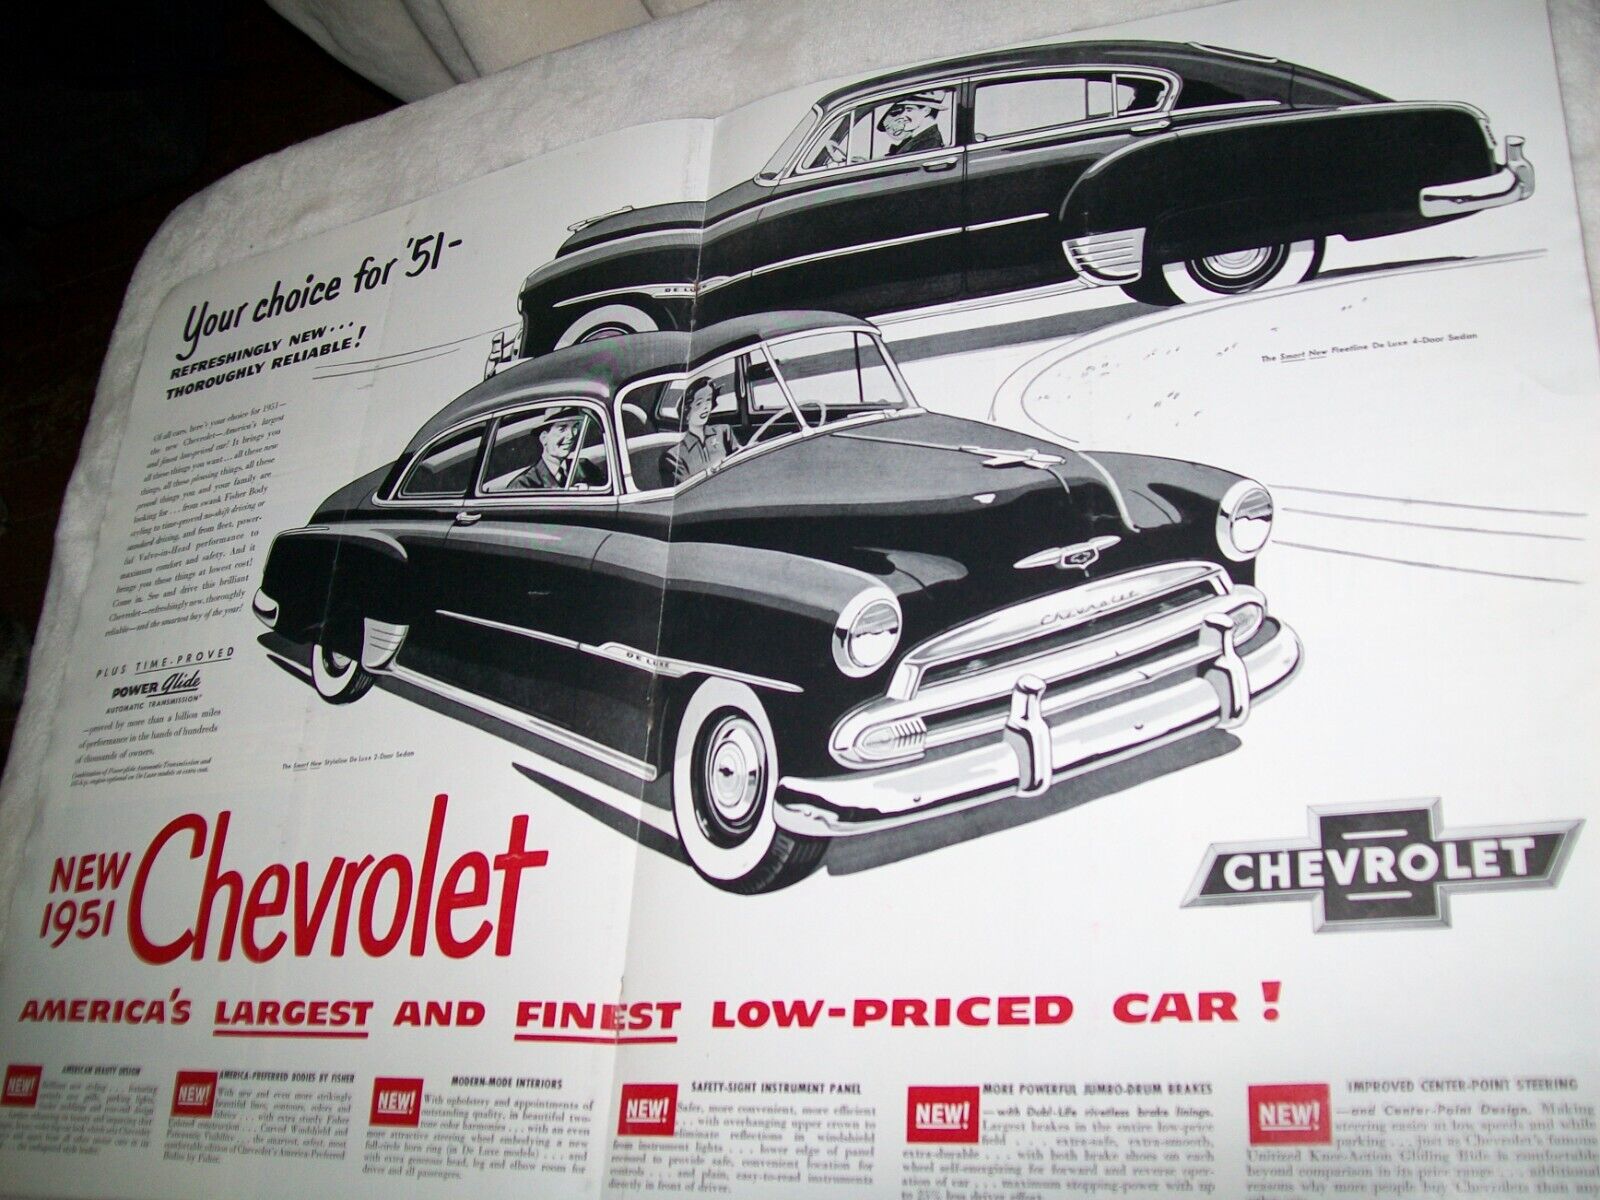 1951 Chevy Fleetline Styleline centerfold ad- complete Feb 1951 Friends Magazine